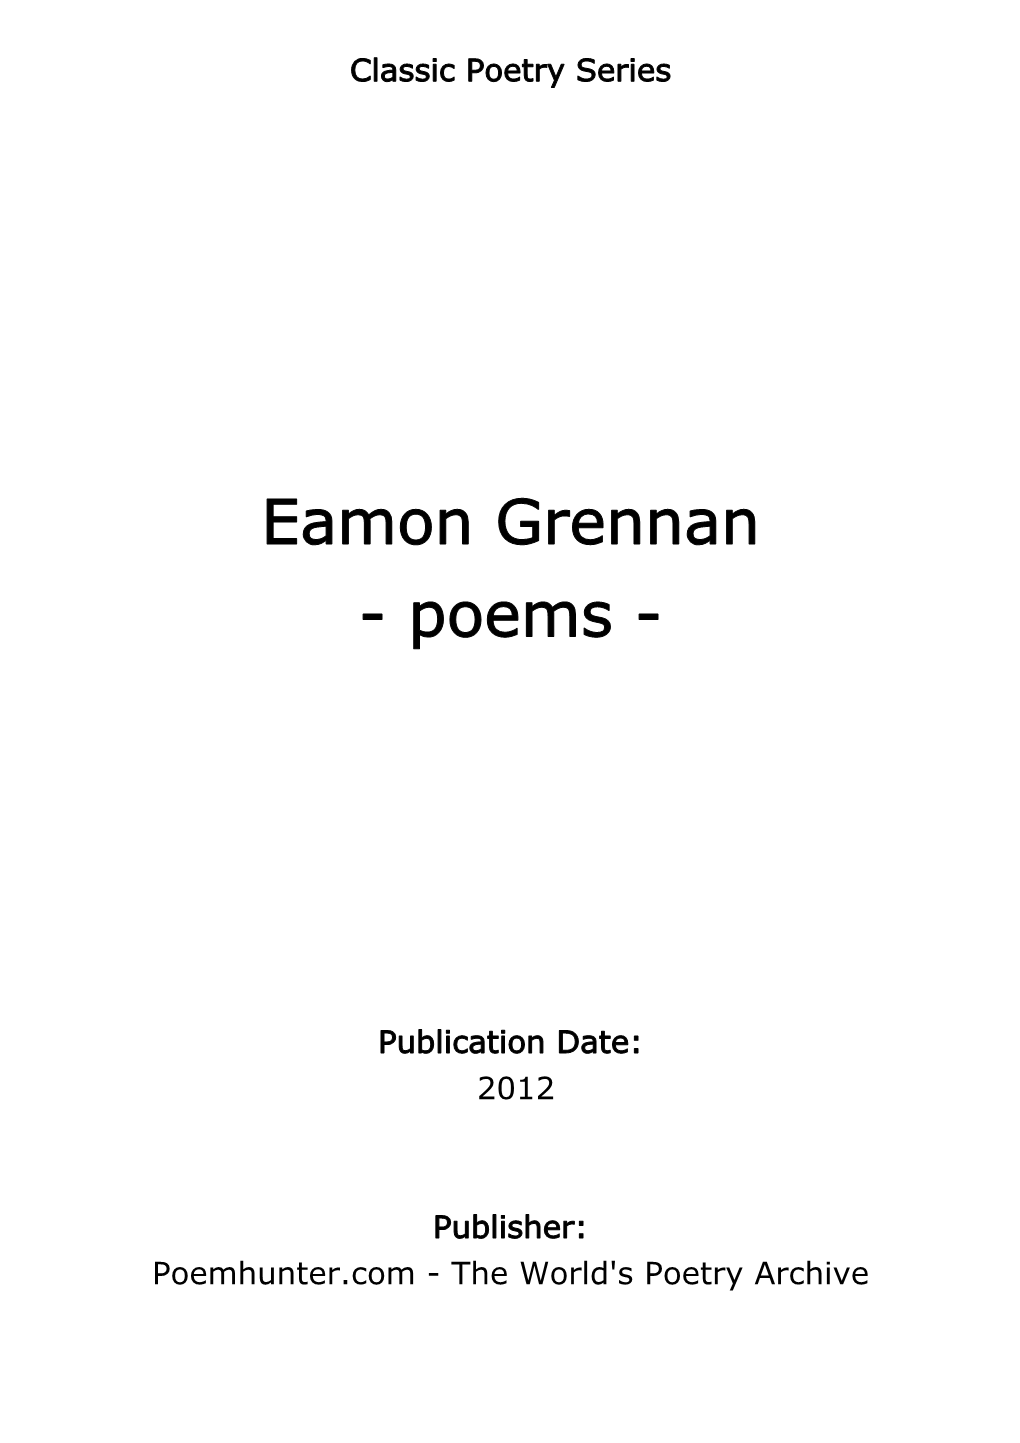 Eamon Grennan - Poems